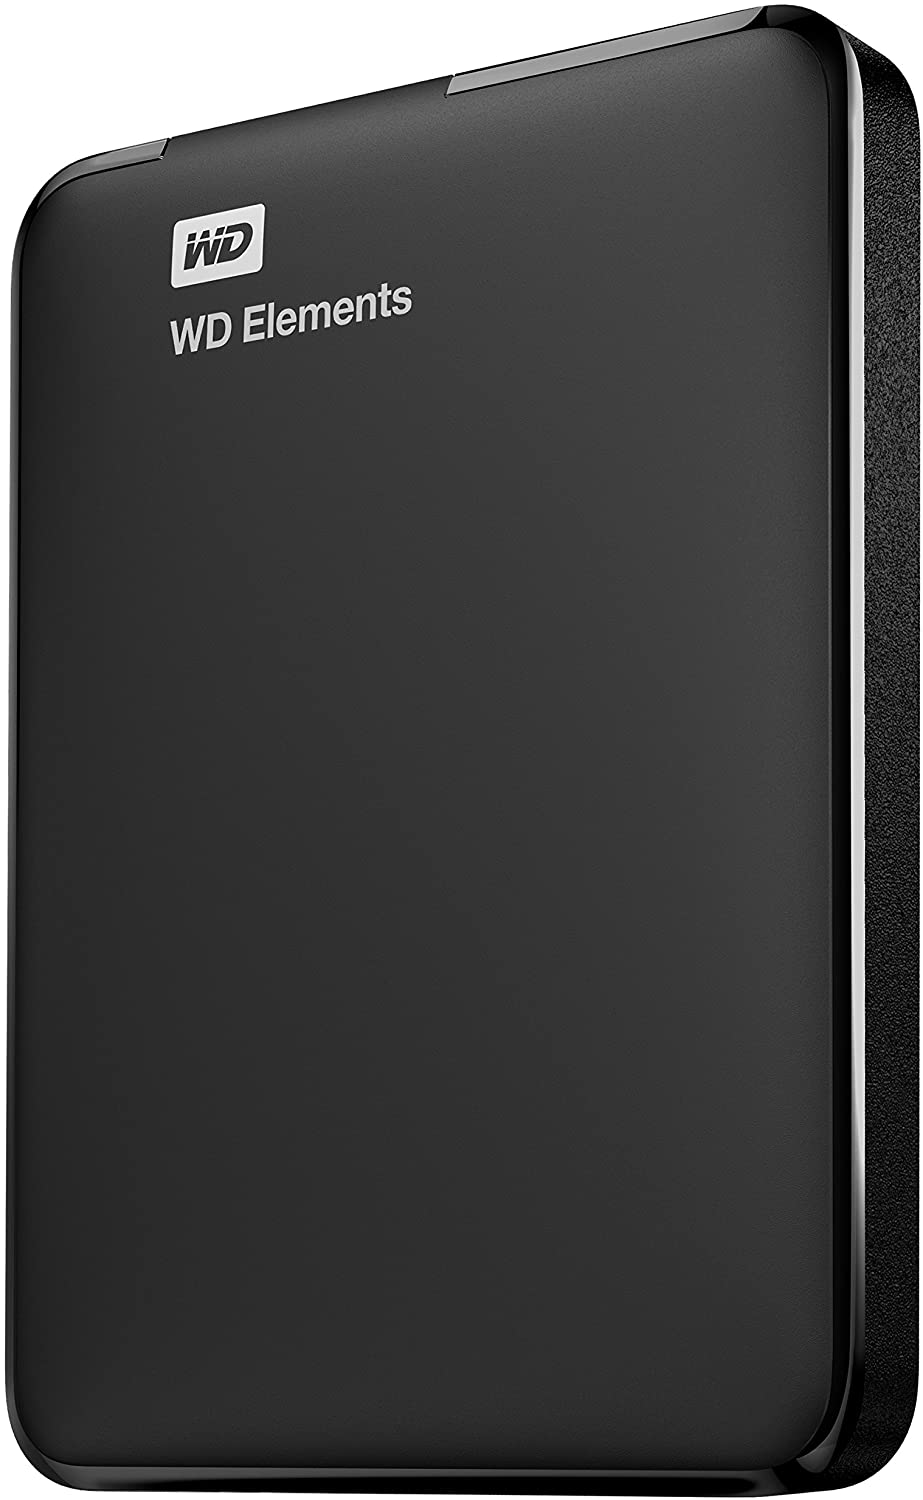 WD Elements 1TB Portable Hard Drive